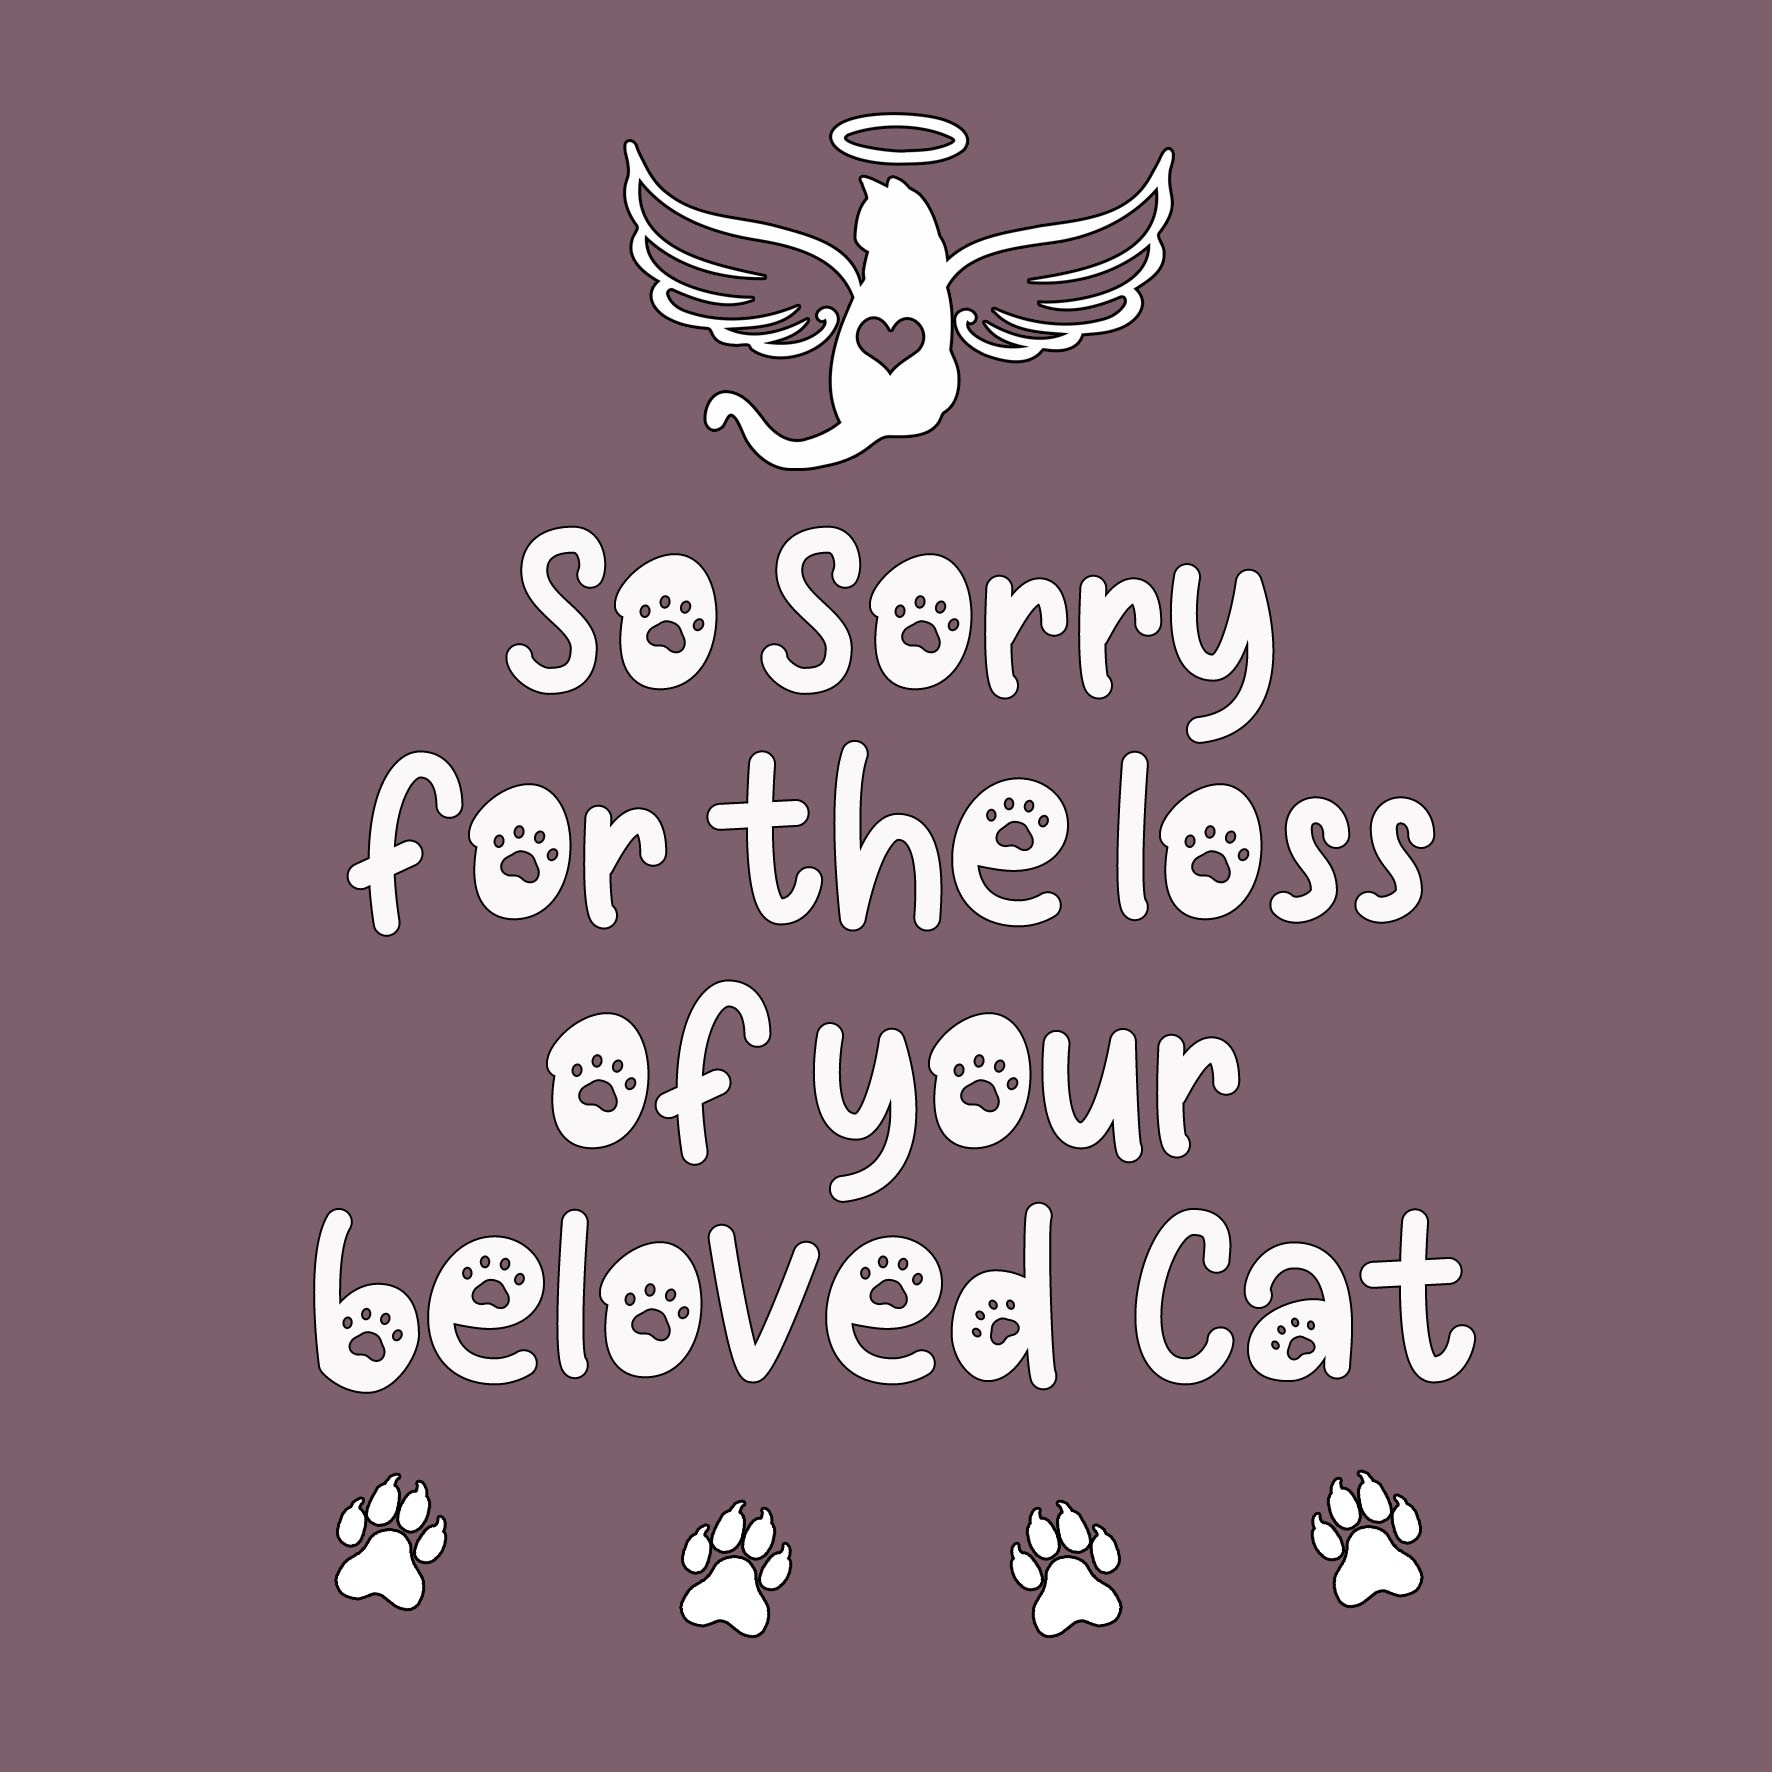 Pet Cat Sympathy Card (Beloved Cat)